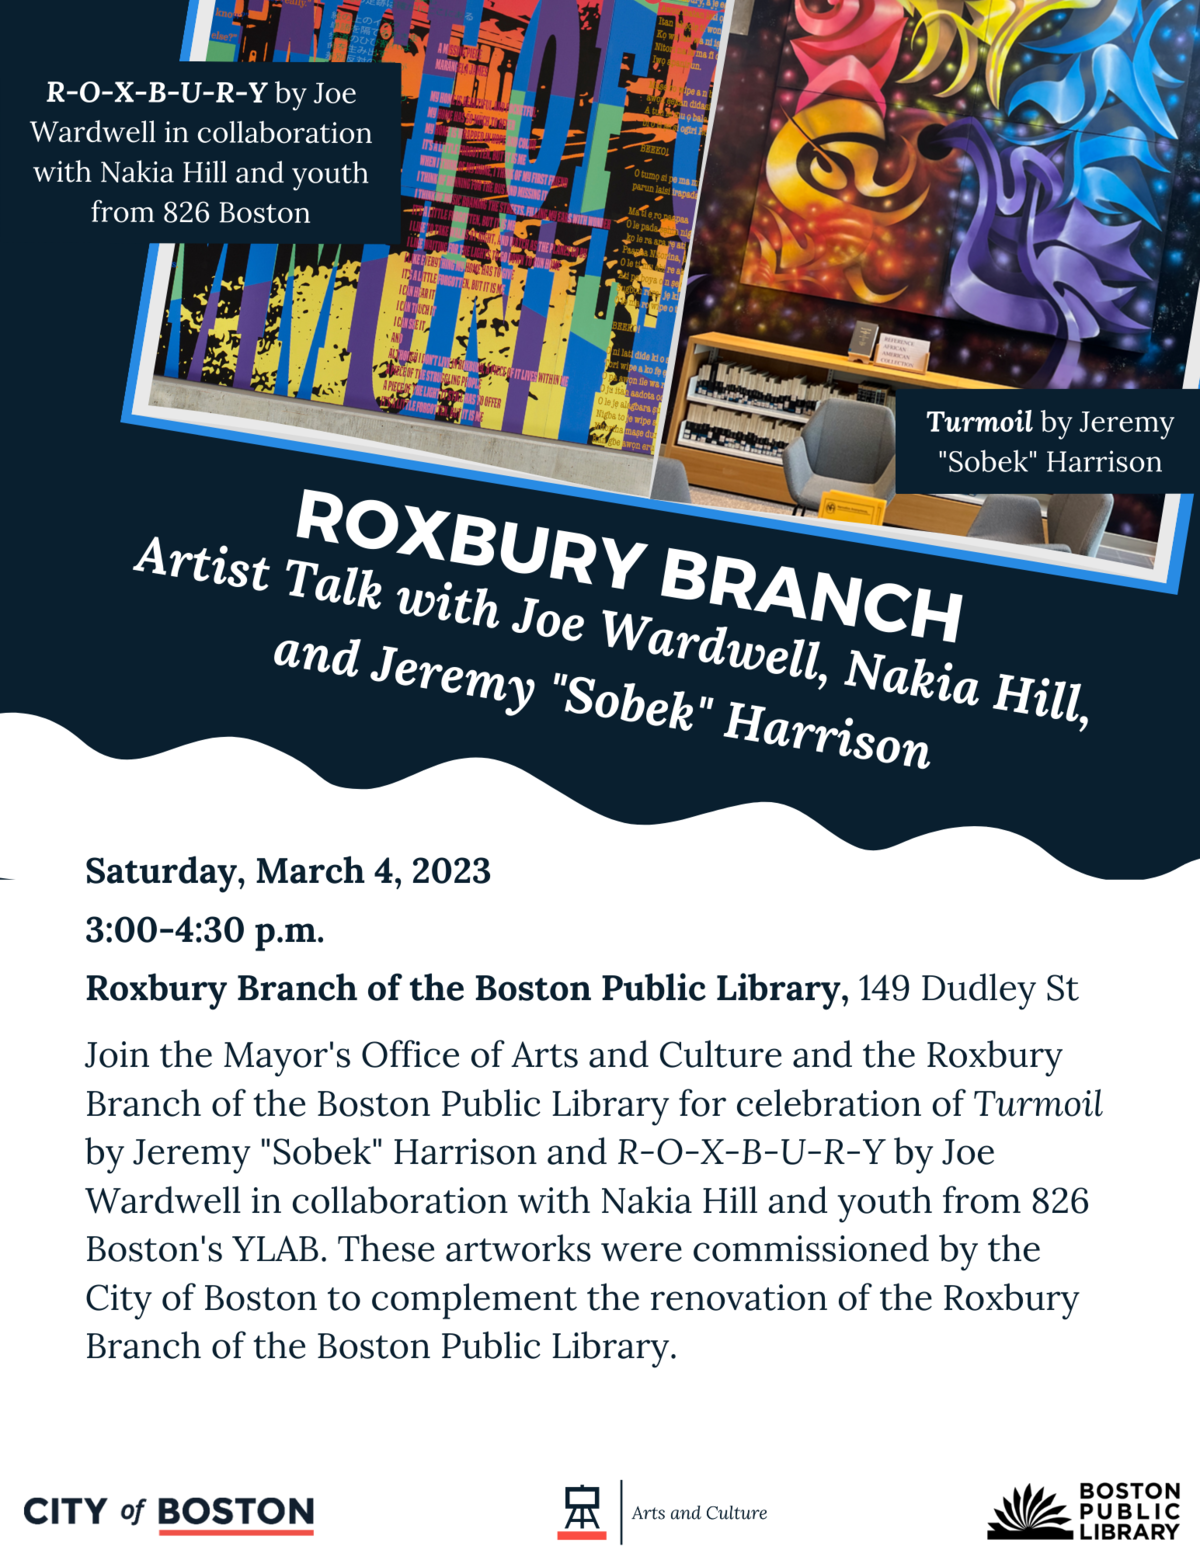 Roxbury branch artist talk flyer